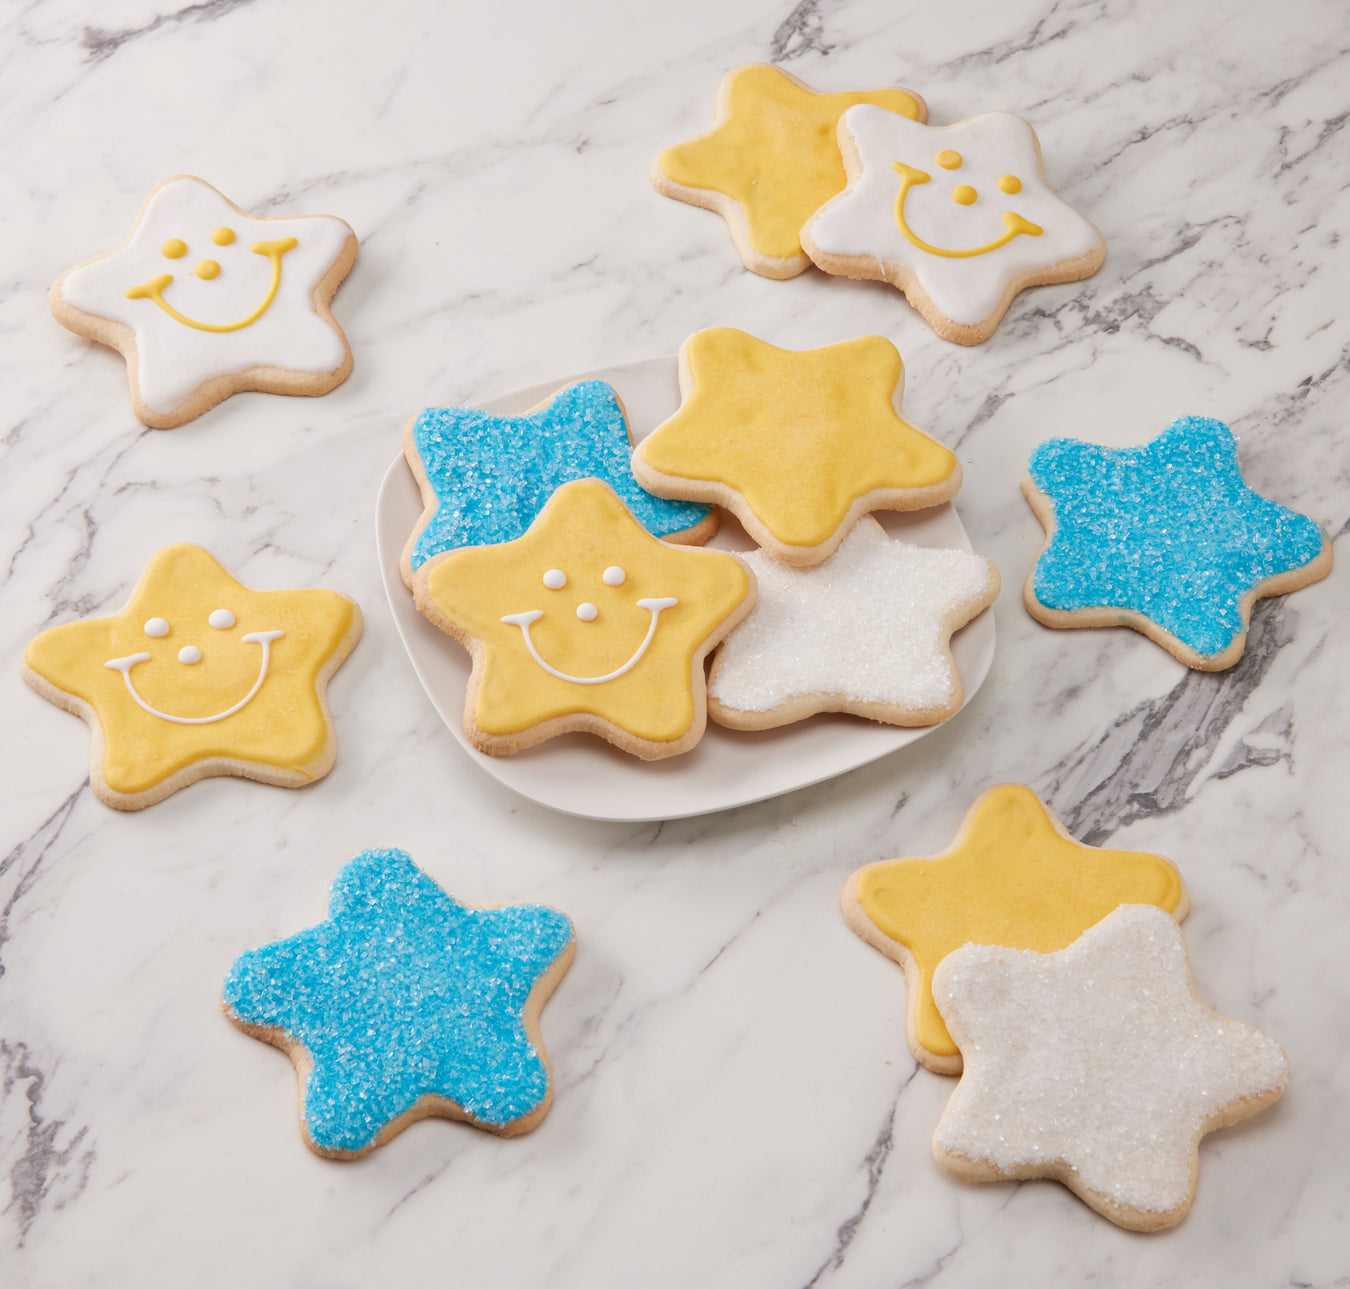 Customize your Smiley Cookies - Custom Star Cookies - Create Your Own Smiley Cookies